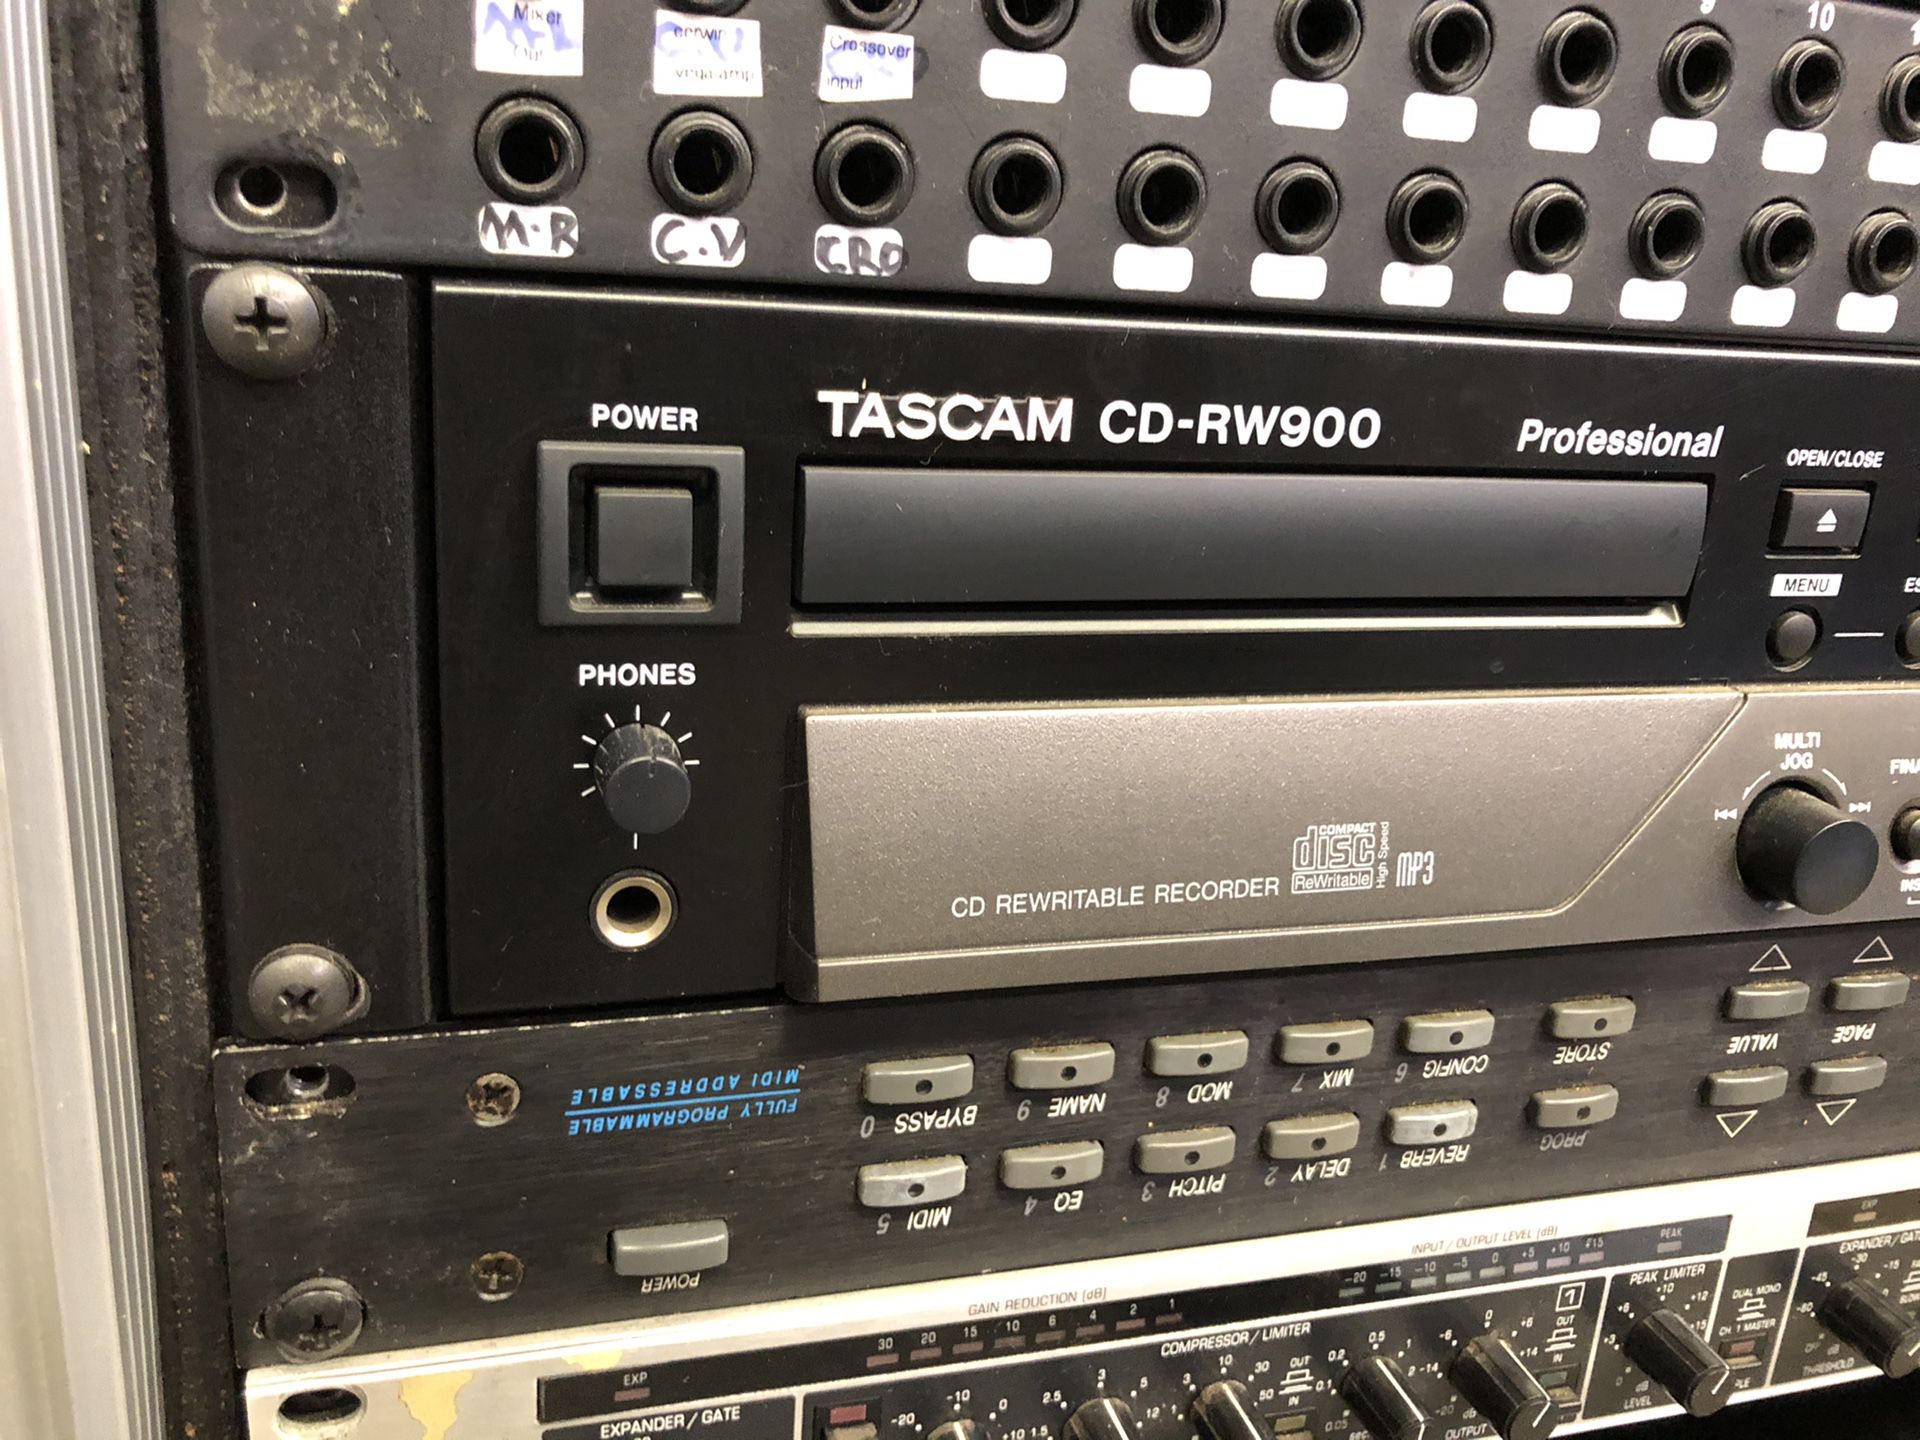 Tascam CD recorder. Pro audio